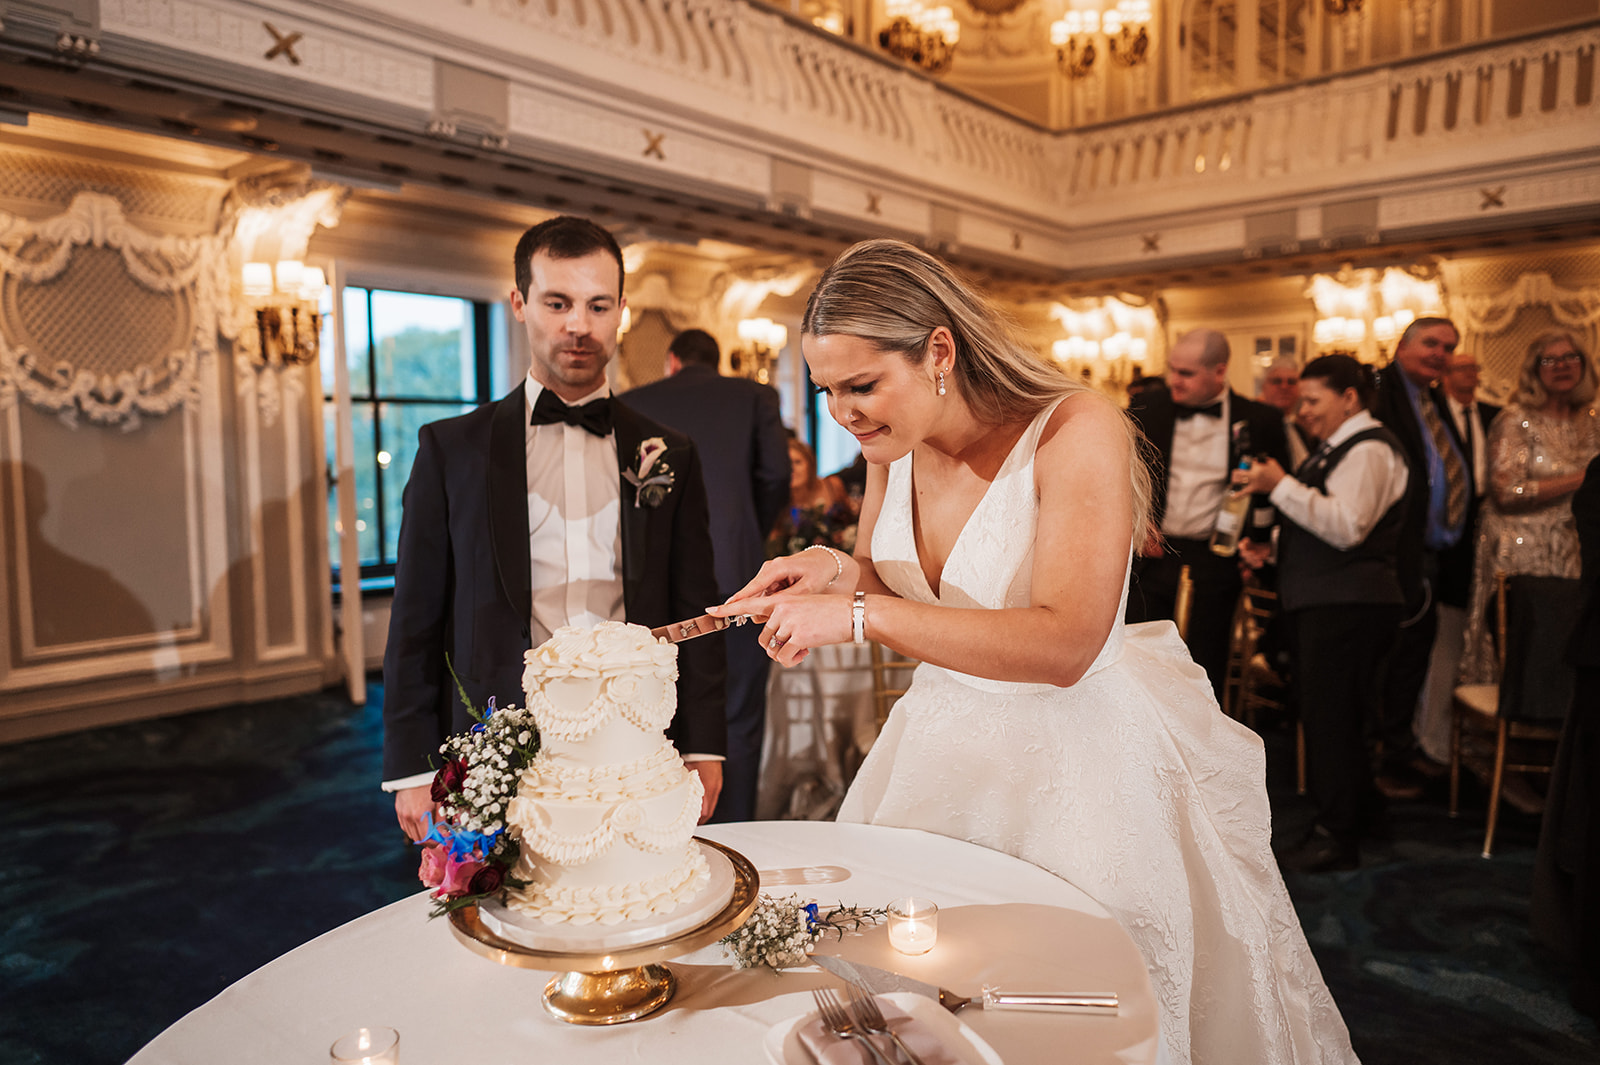 The Blackstone hotel in chicago wedding photos - reception  cake cutting
